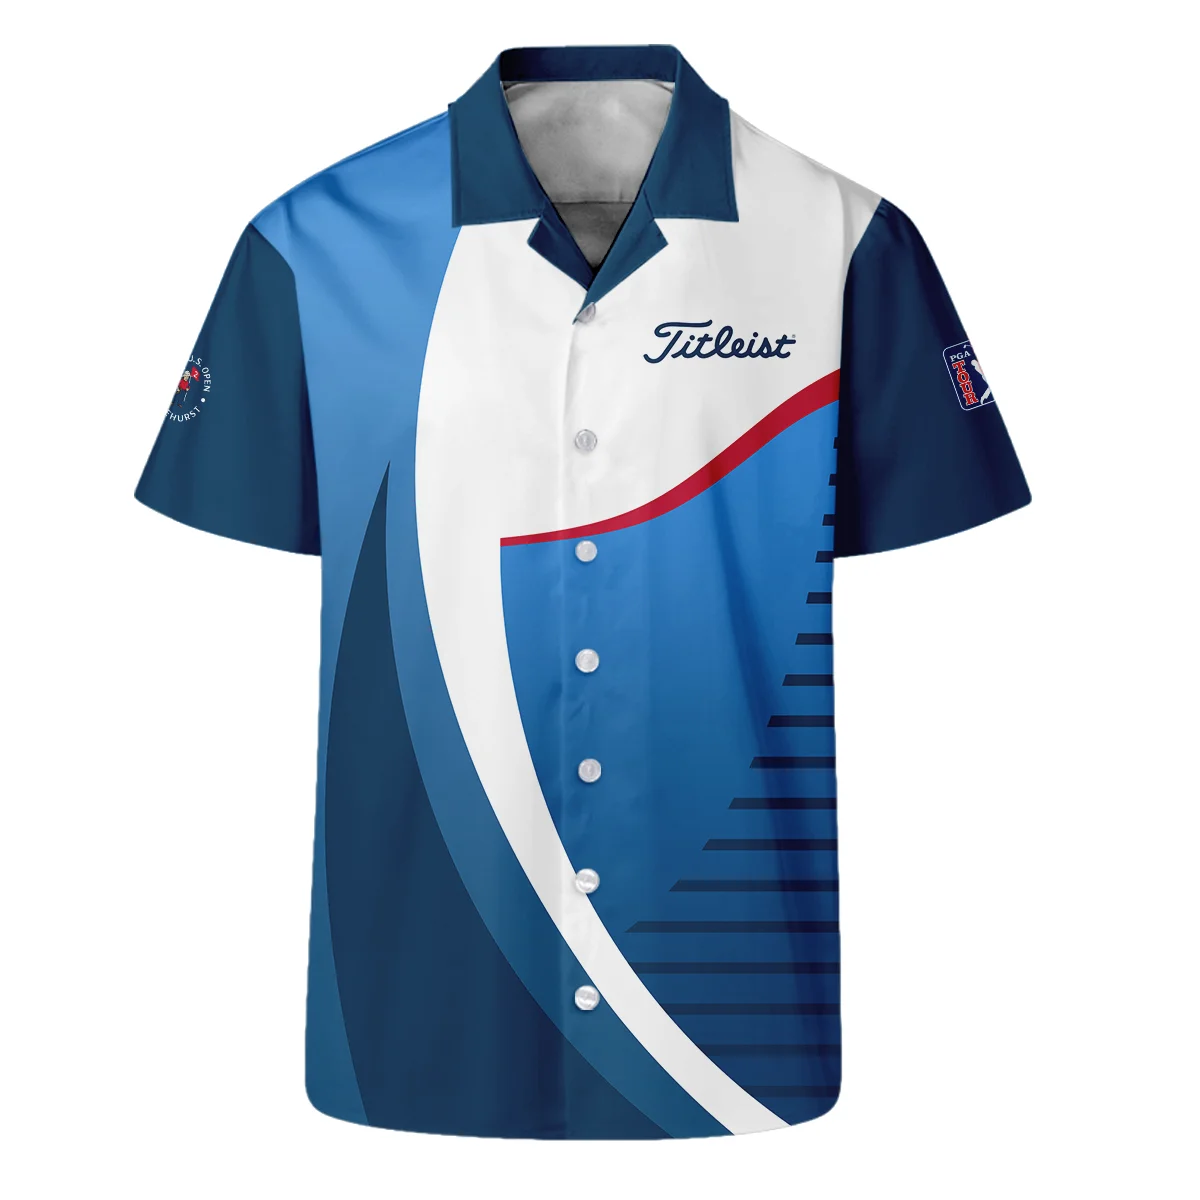 124th U.S. Open Pinehurst Golf Sport Titleist Sleeveless Jacket Blue Gradient Red Straight Sleeveless Jacket